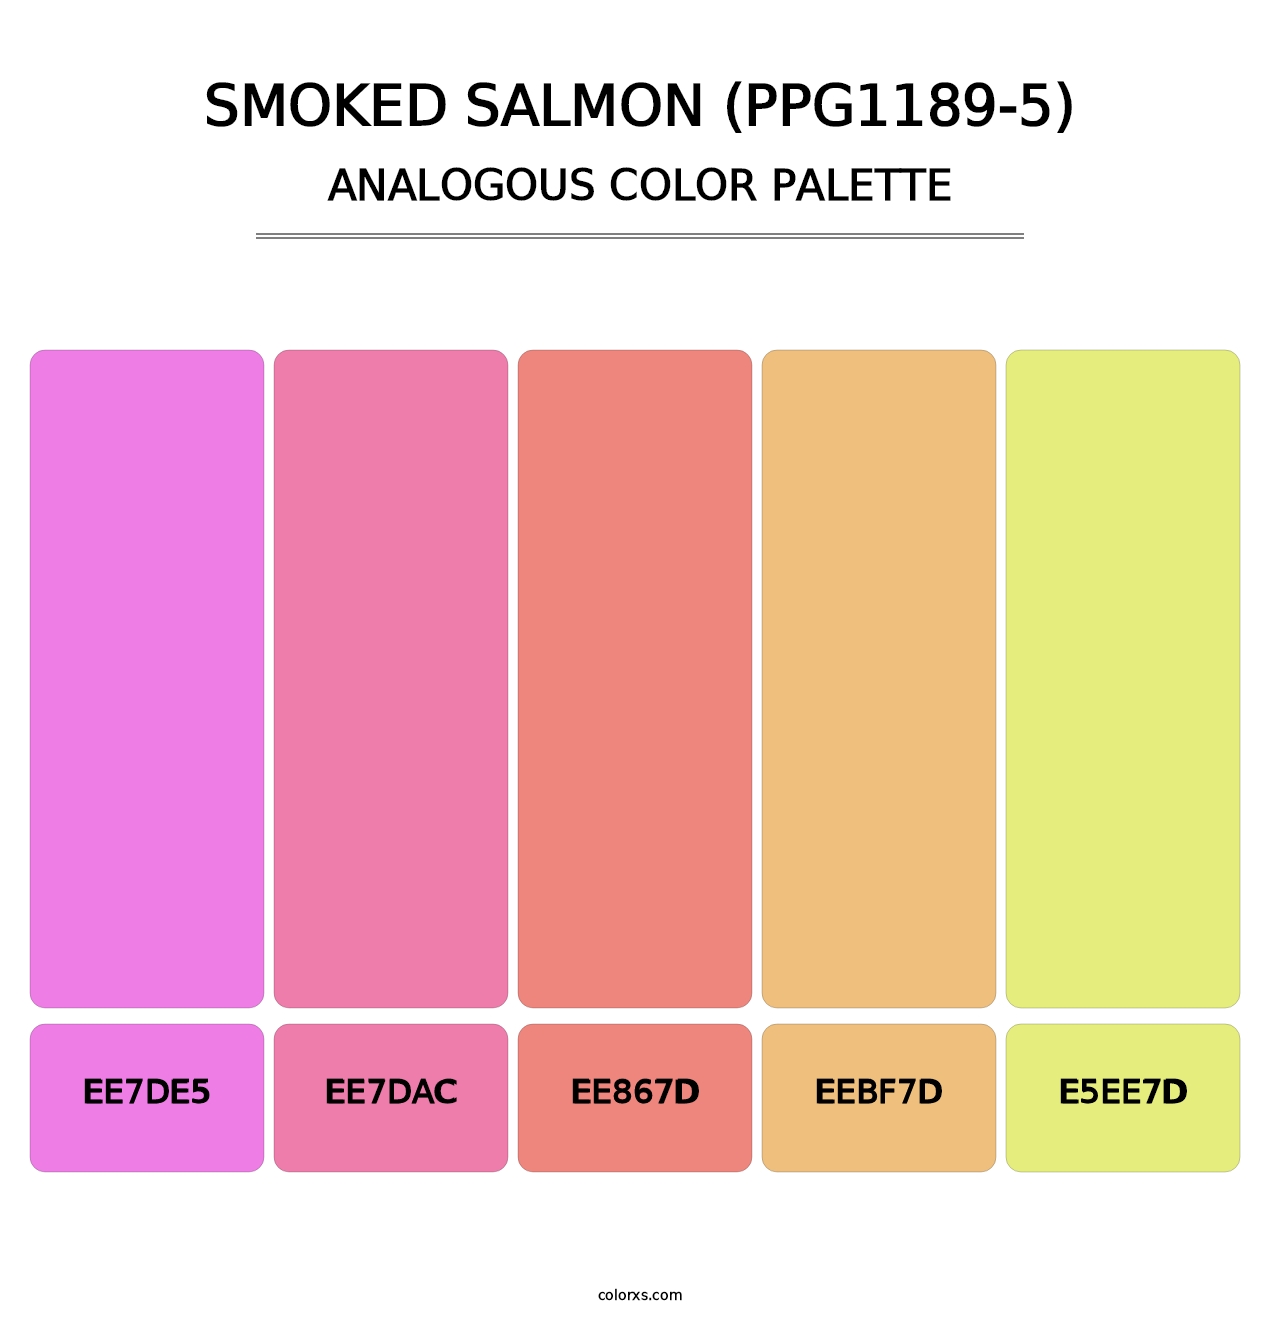 Smoked Salmon (PPG1189-5) - Analogous Color Palette